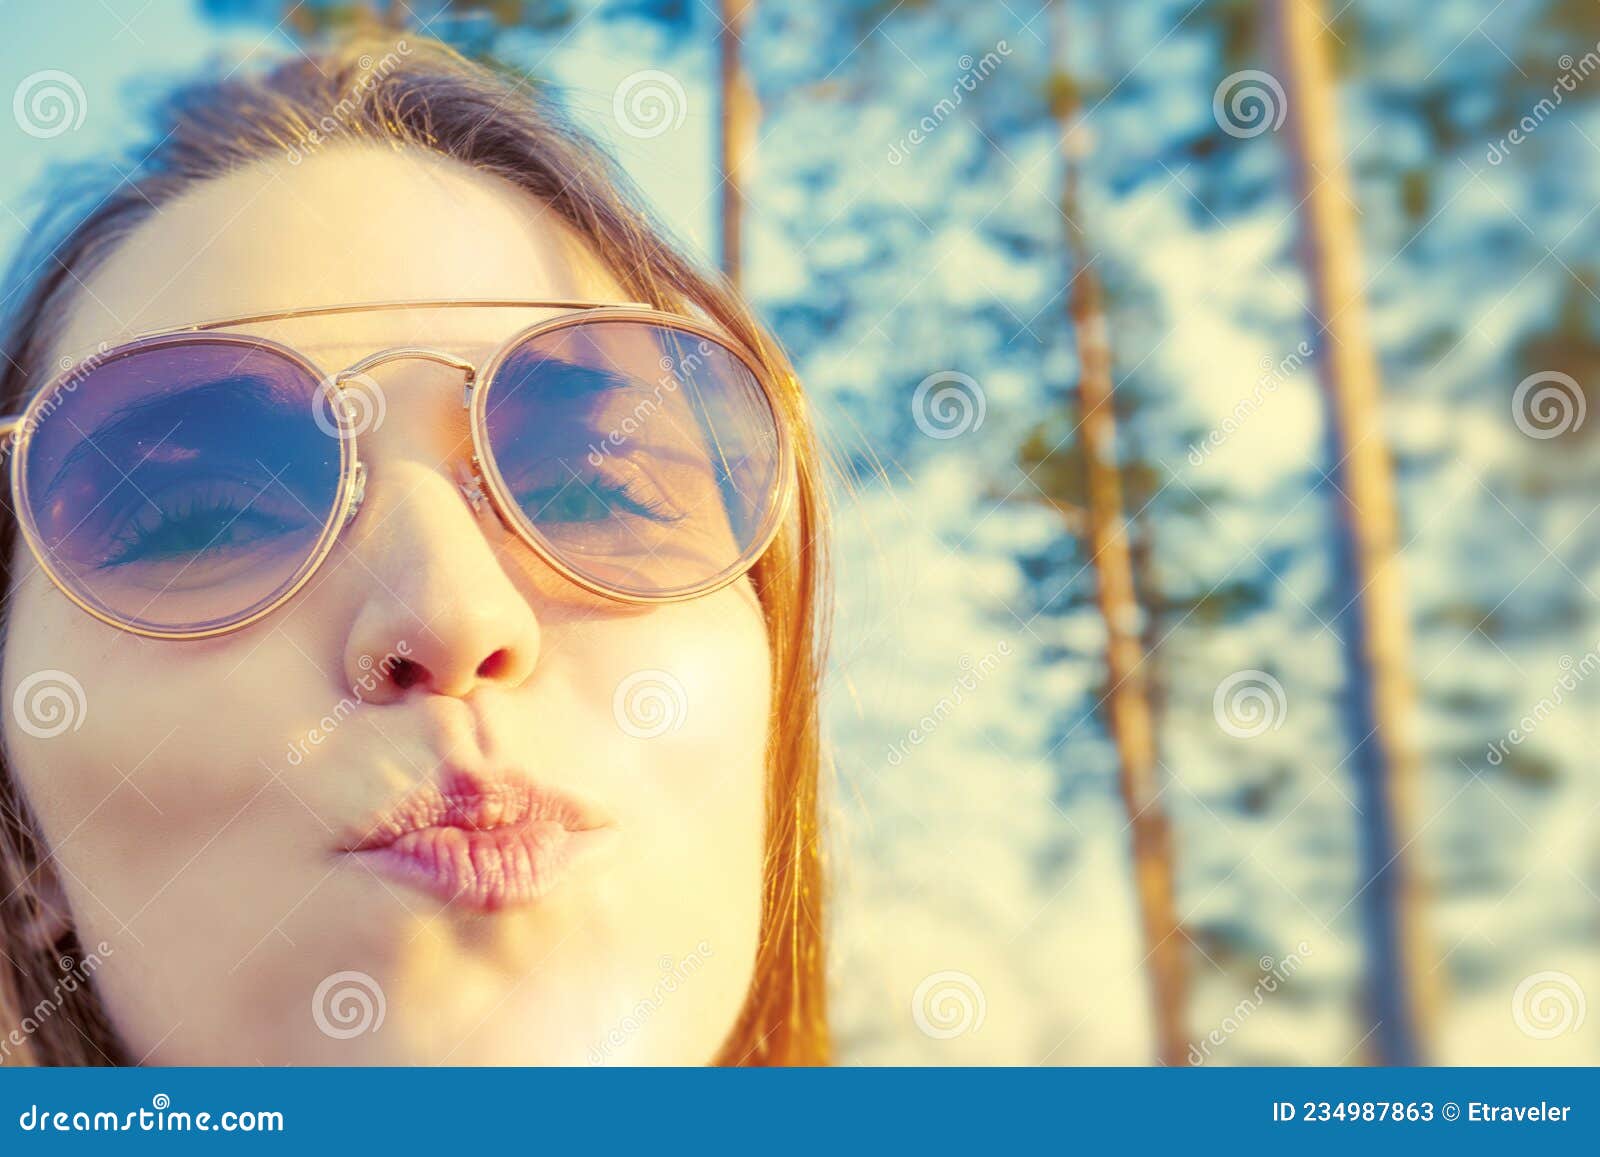 woman tourist enjoying fresh air in the woods and sending air kiss